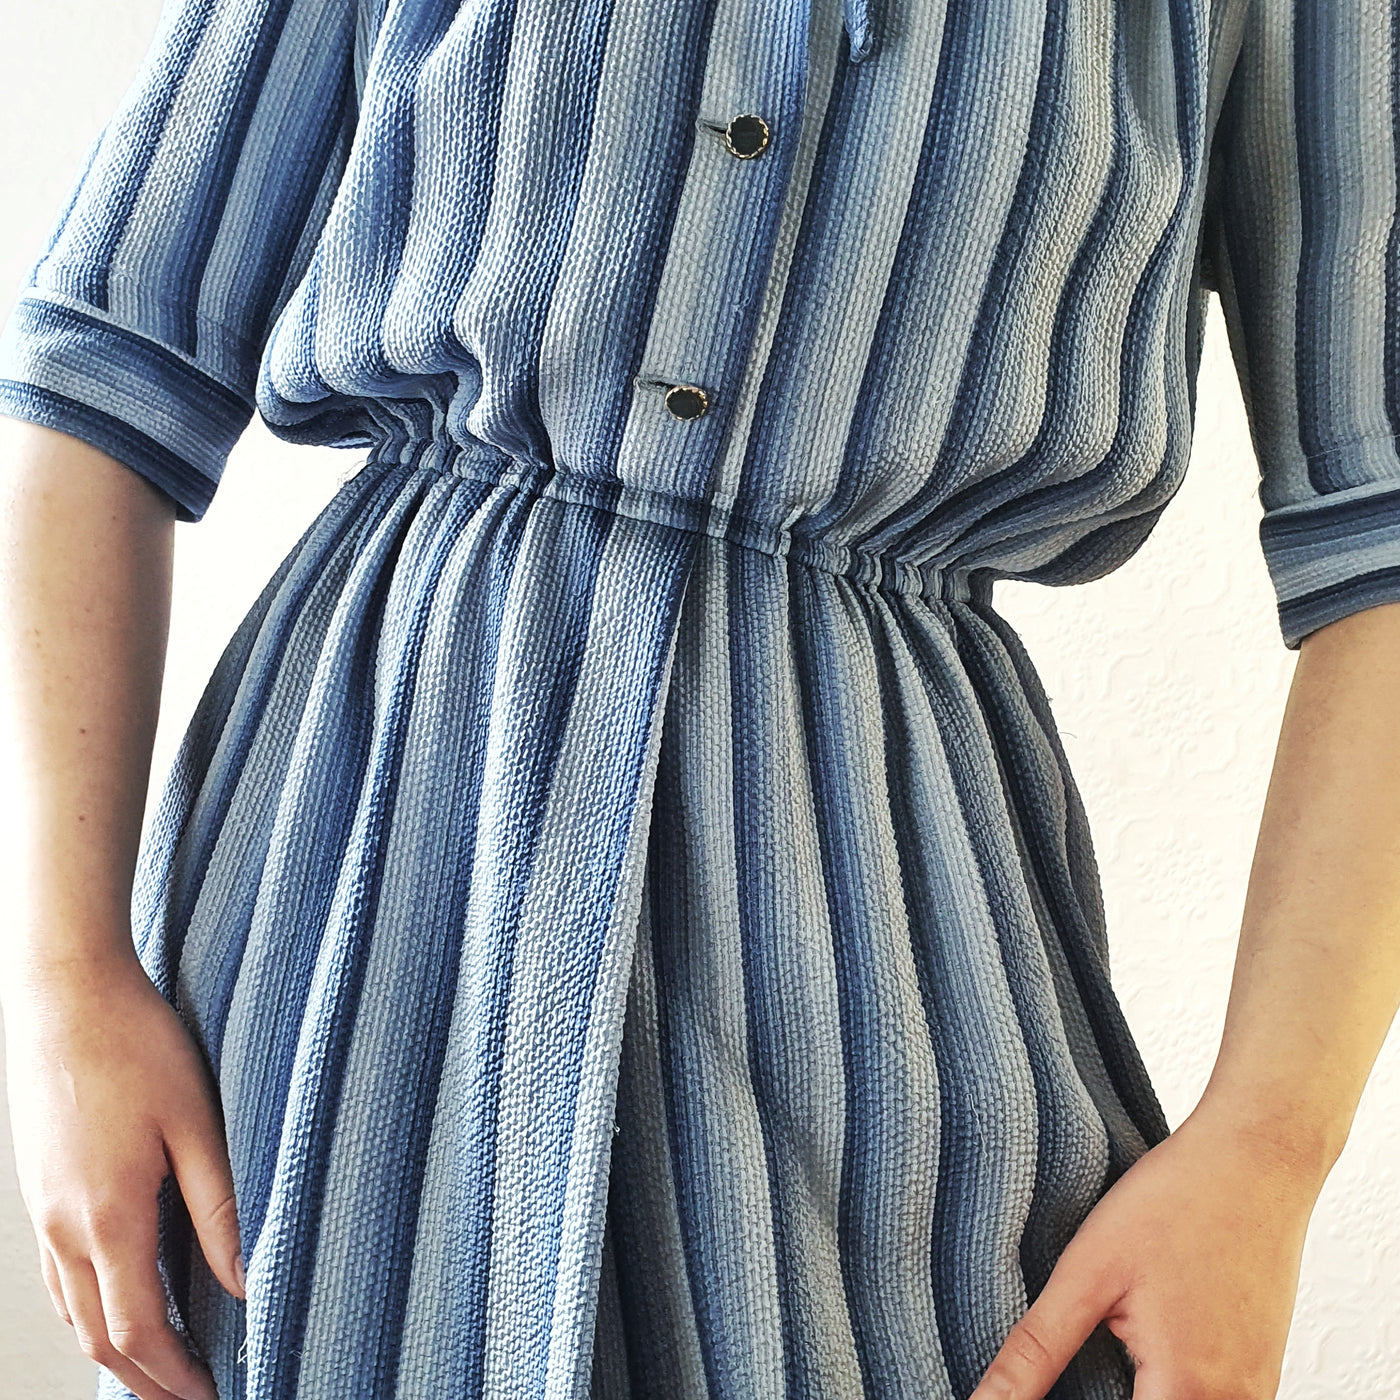 Vintage 100% Silk Blue Striped Dress - M